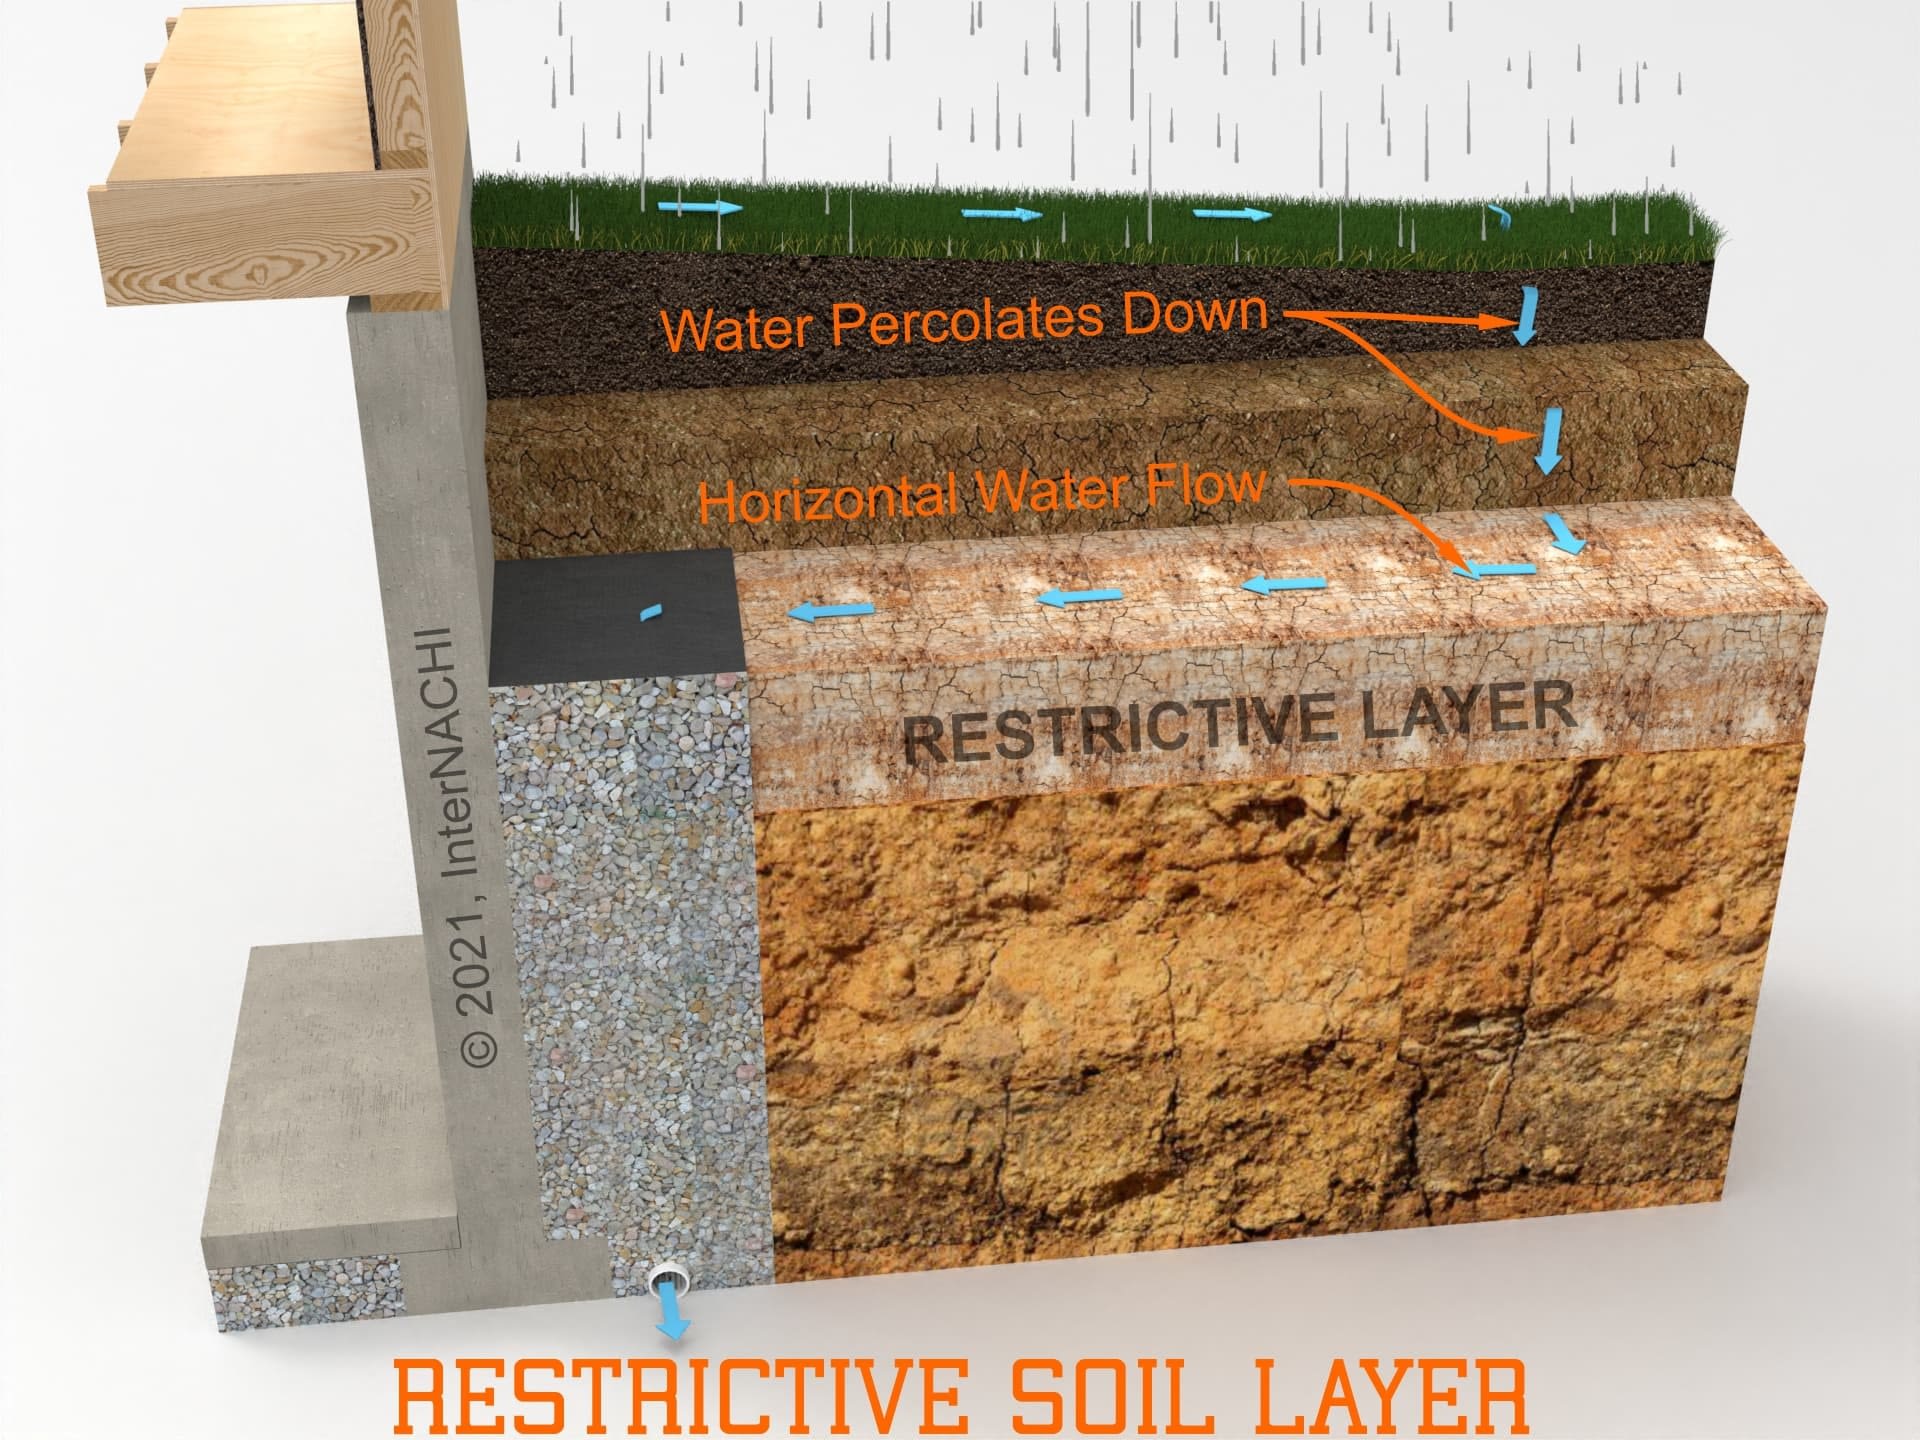 Restrictive soil layer.